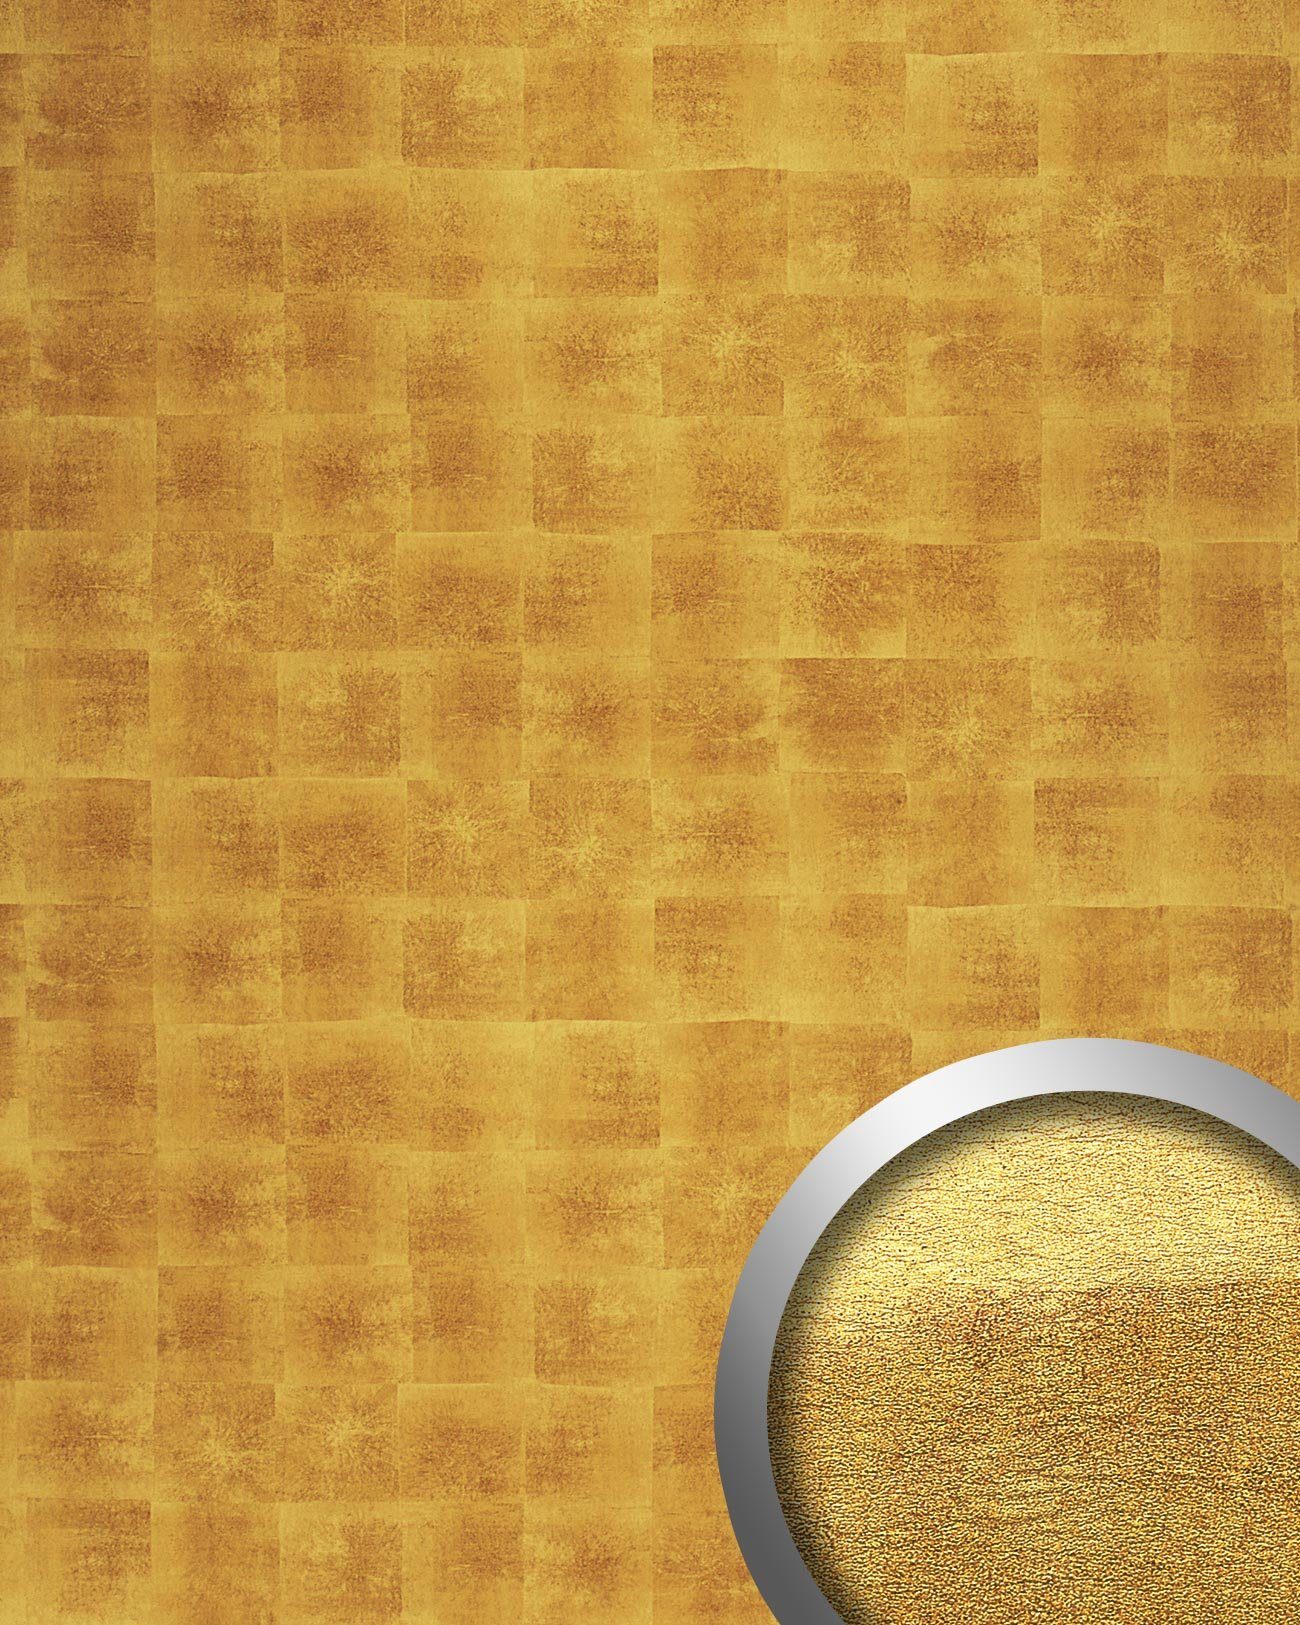 Wallface Dekorpaneele 21392-SA, BxL: 100x260 cm, 2.6 qm, (Dekorpaneel, 1-tlg., Wandverkleidung in Metall-Optik) selbstklebend, Gold, matt